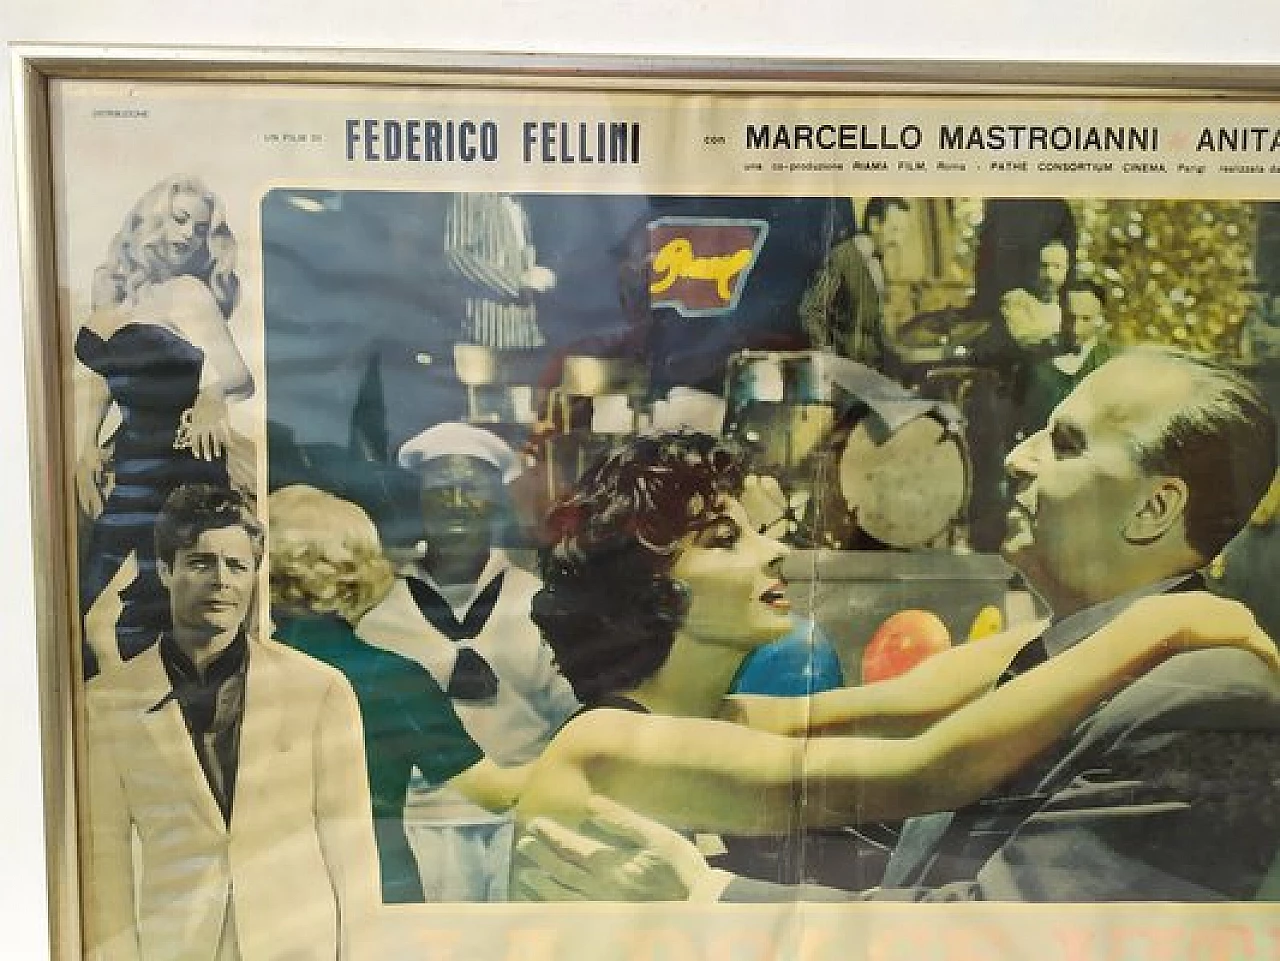 Poster of Federico Fellini's film La dolce vita by Cineriz, 1960s 5